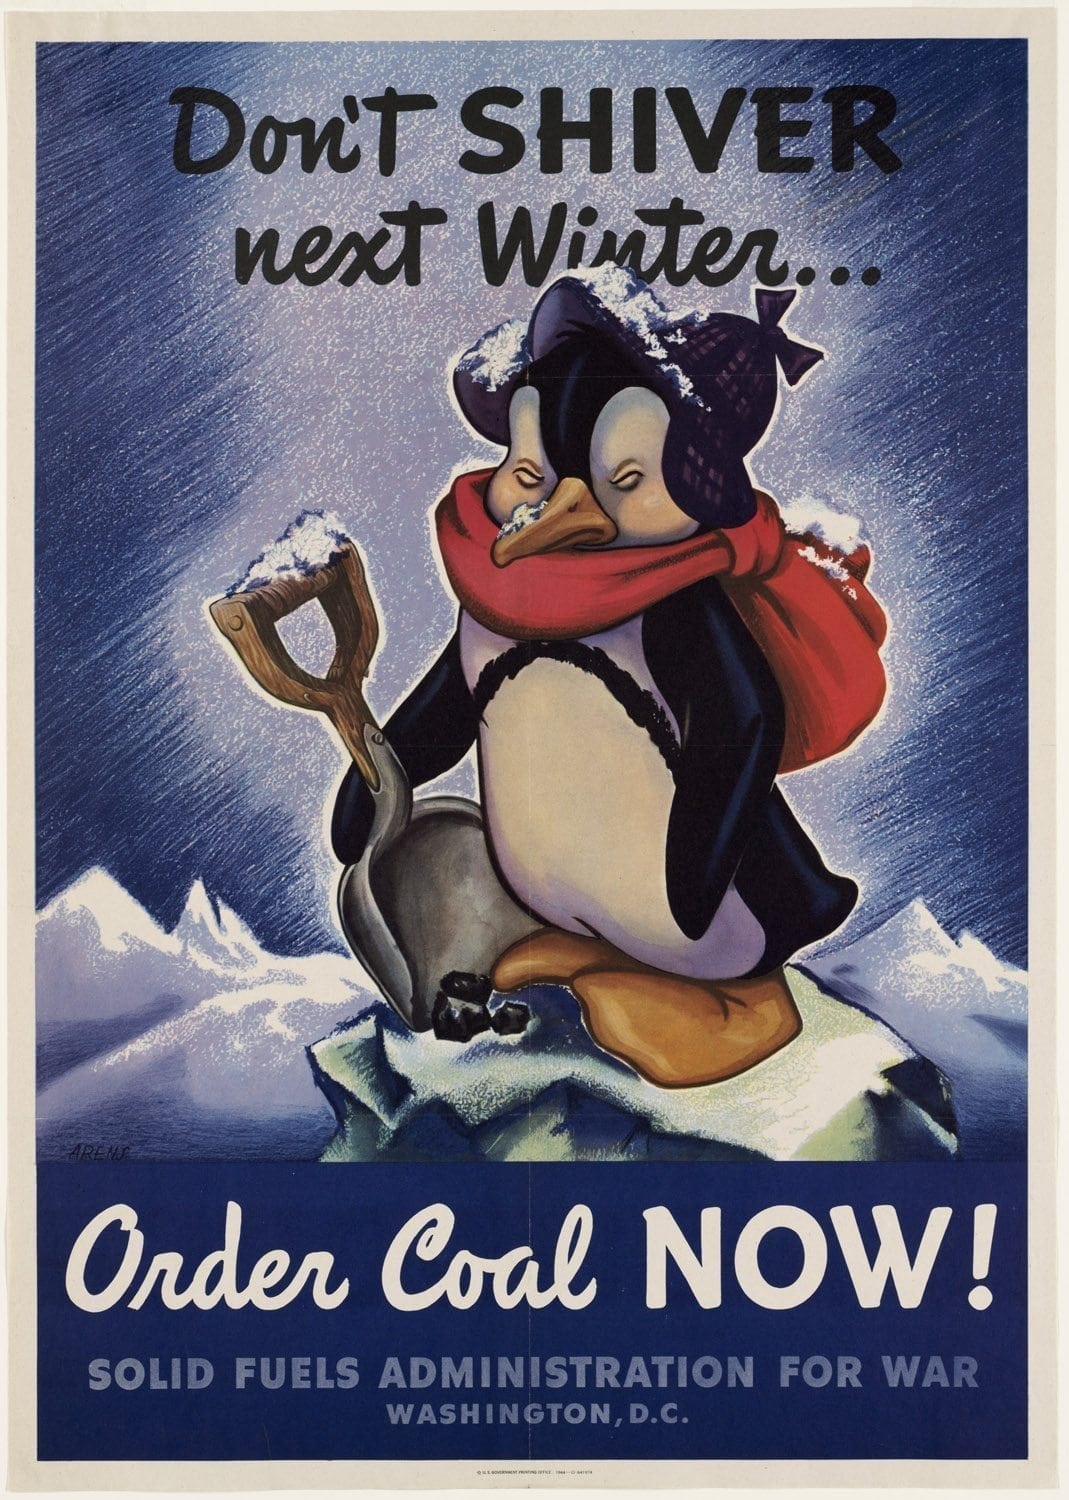 WWII propaganda save energy